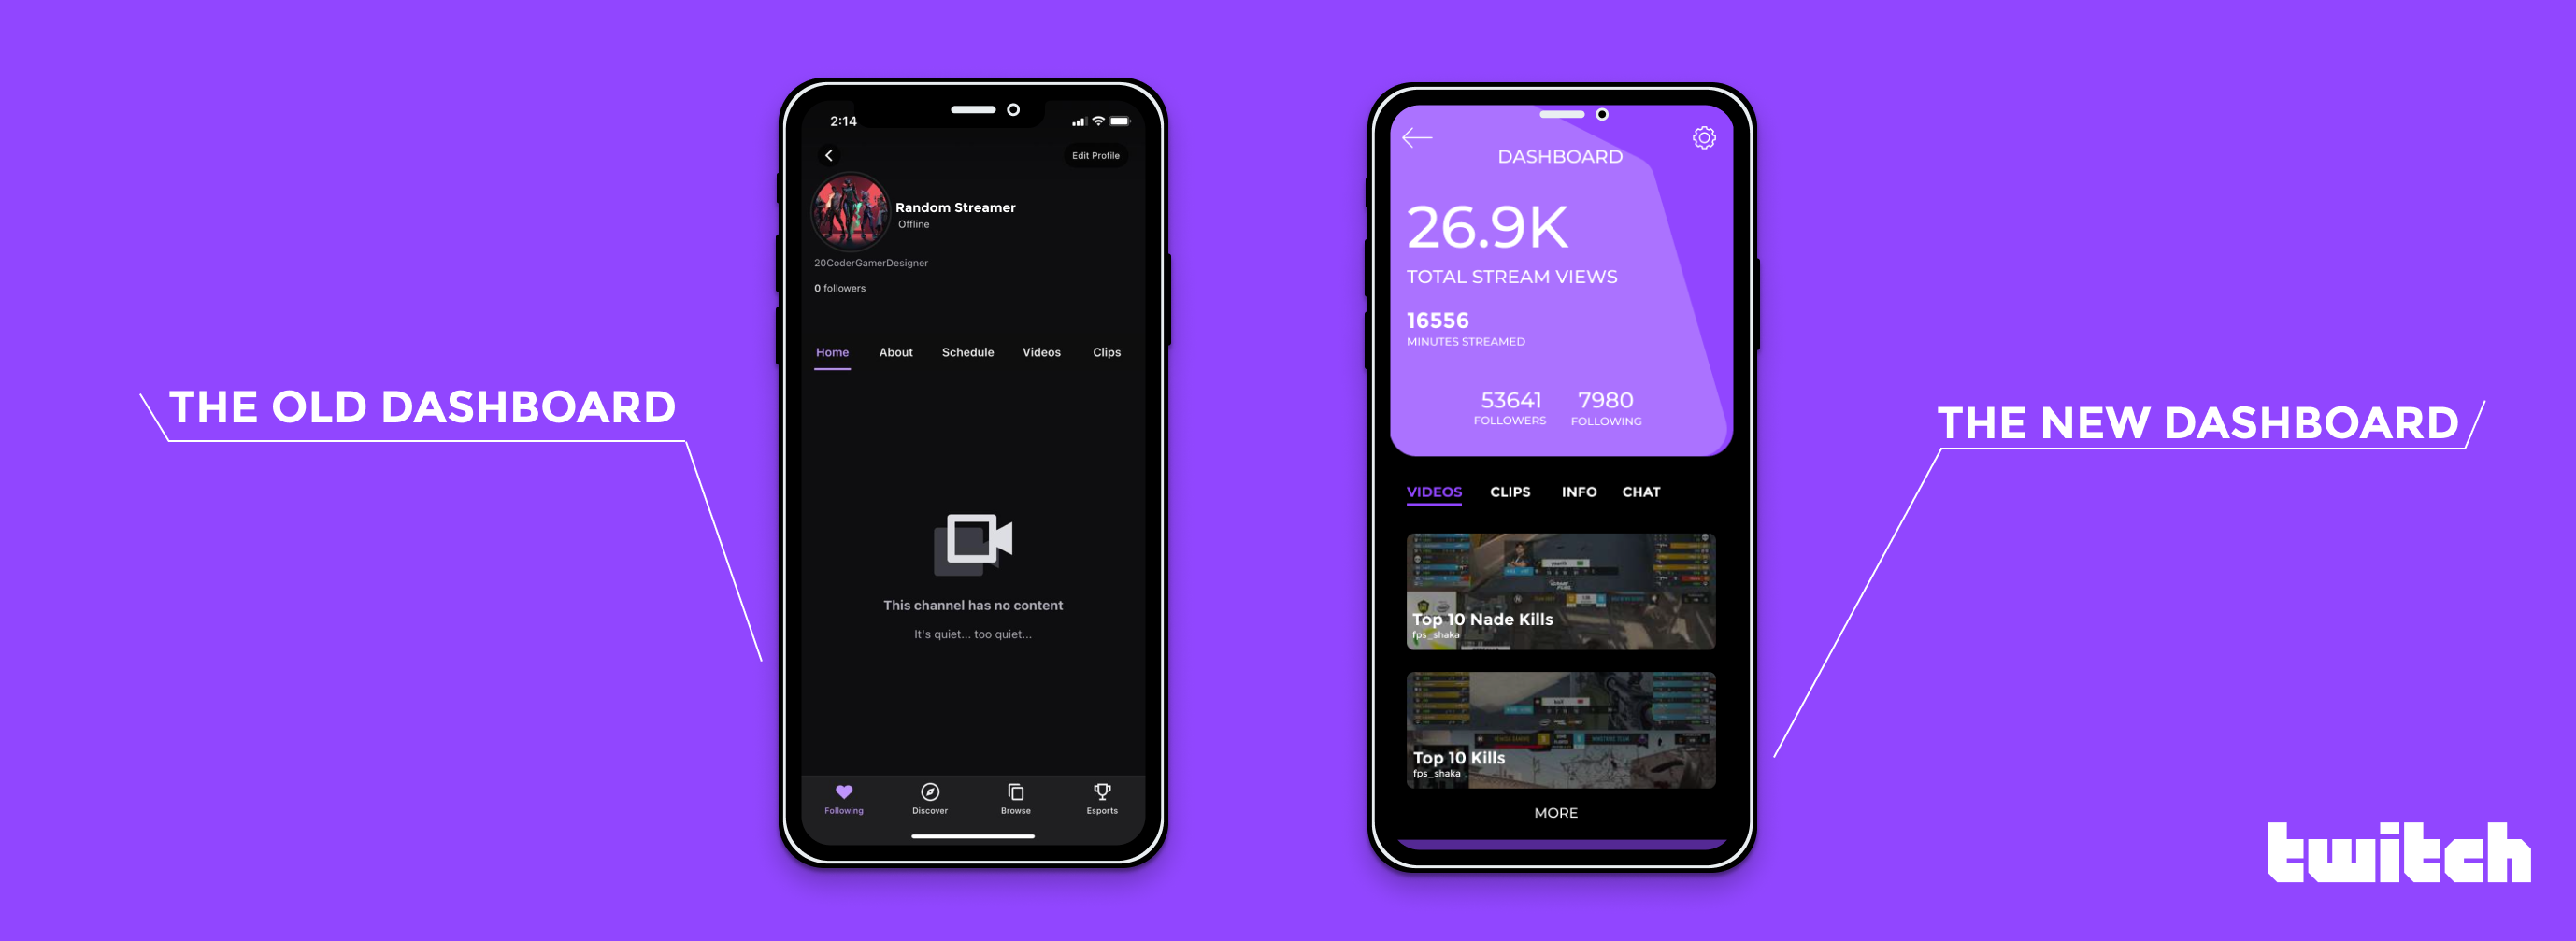 Twitch.tv Mobile App - UI/UX Design